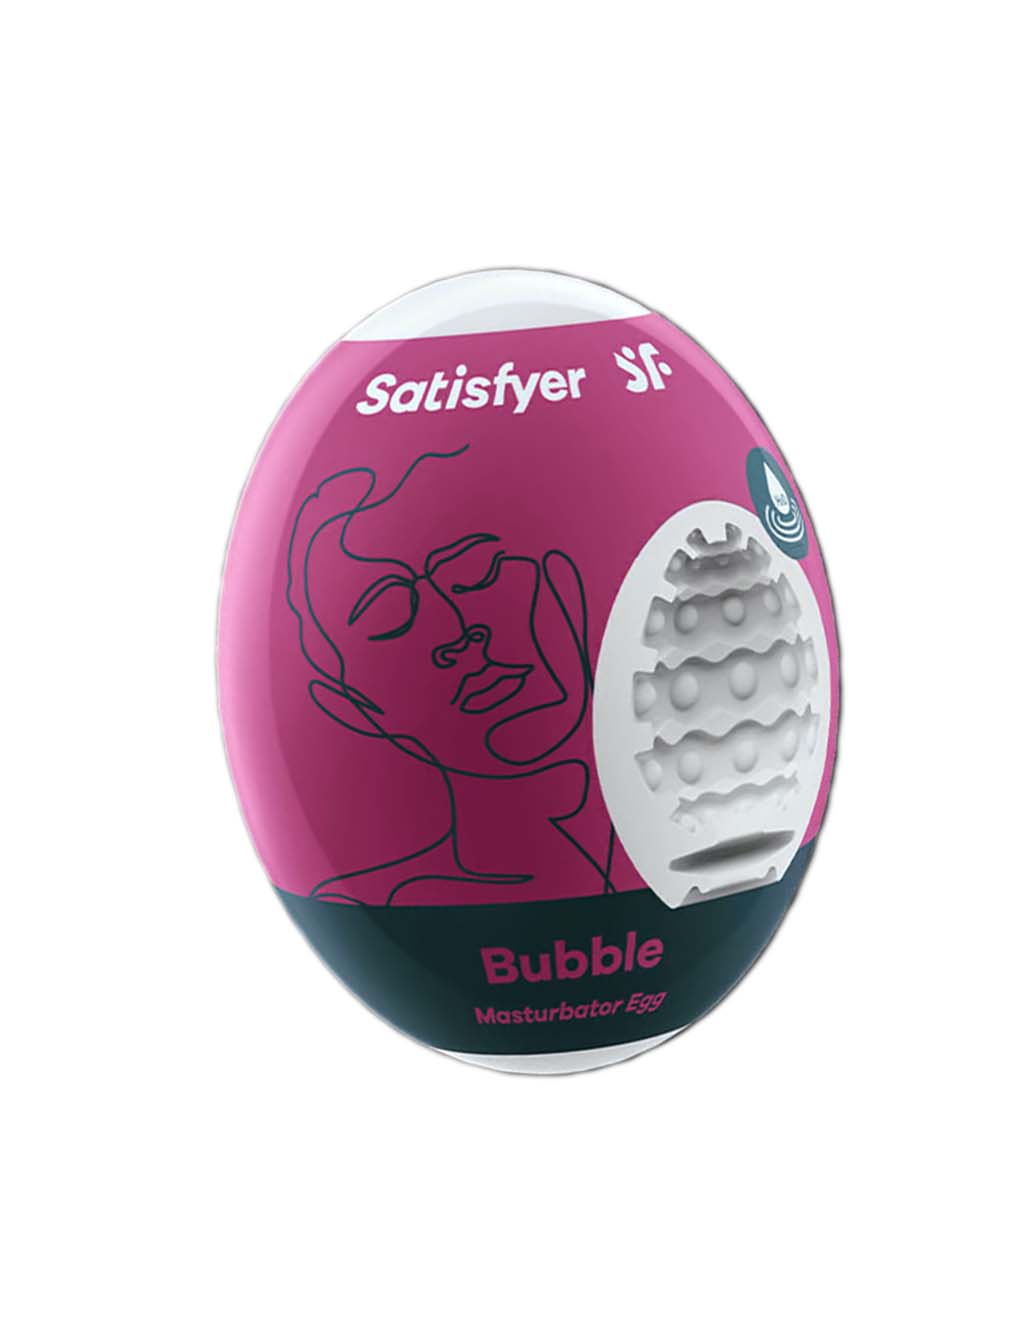 Satisfyer Masturbator Egg Bubble- Box